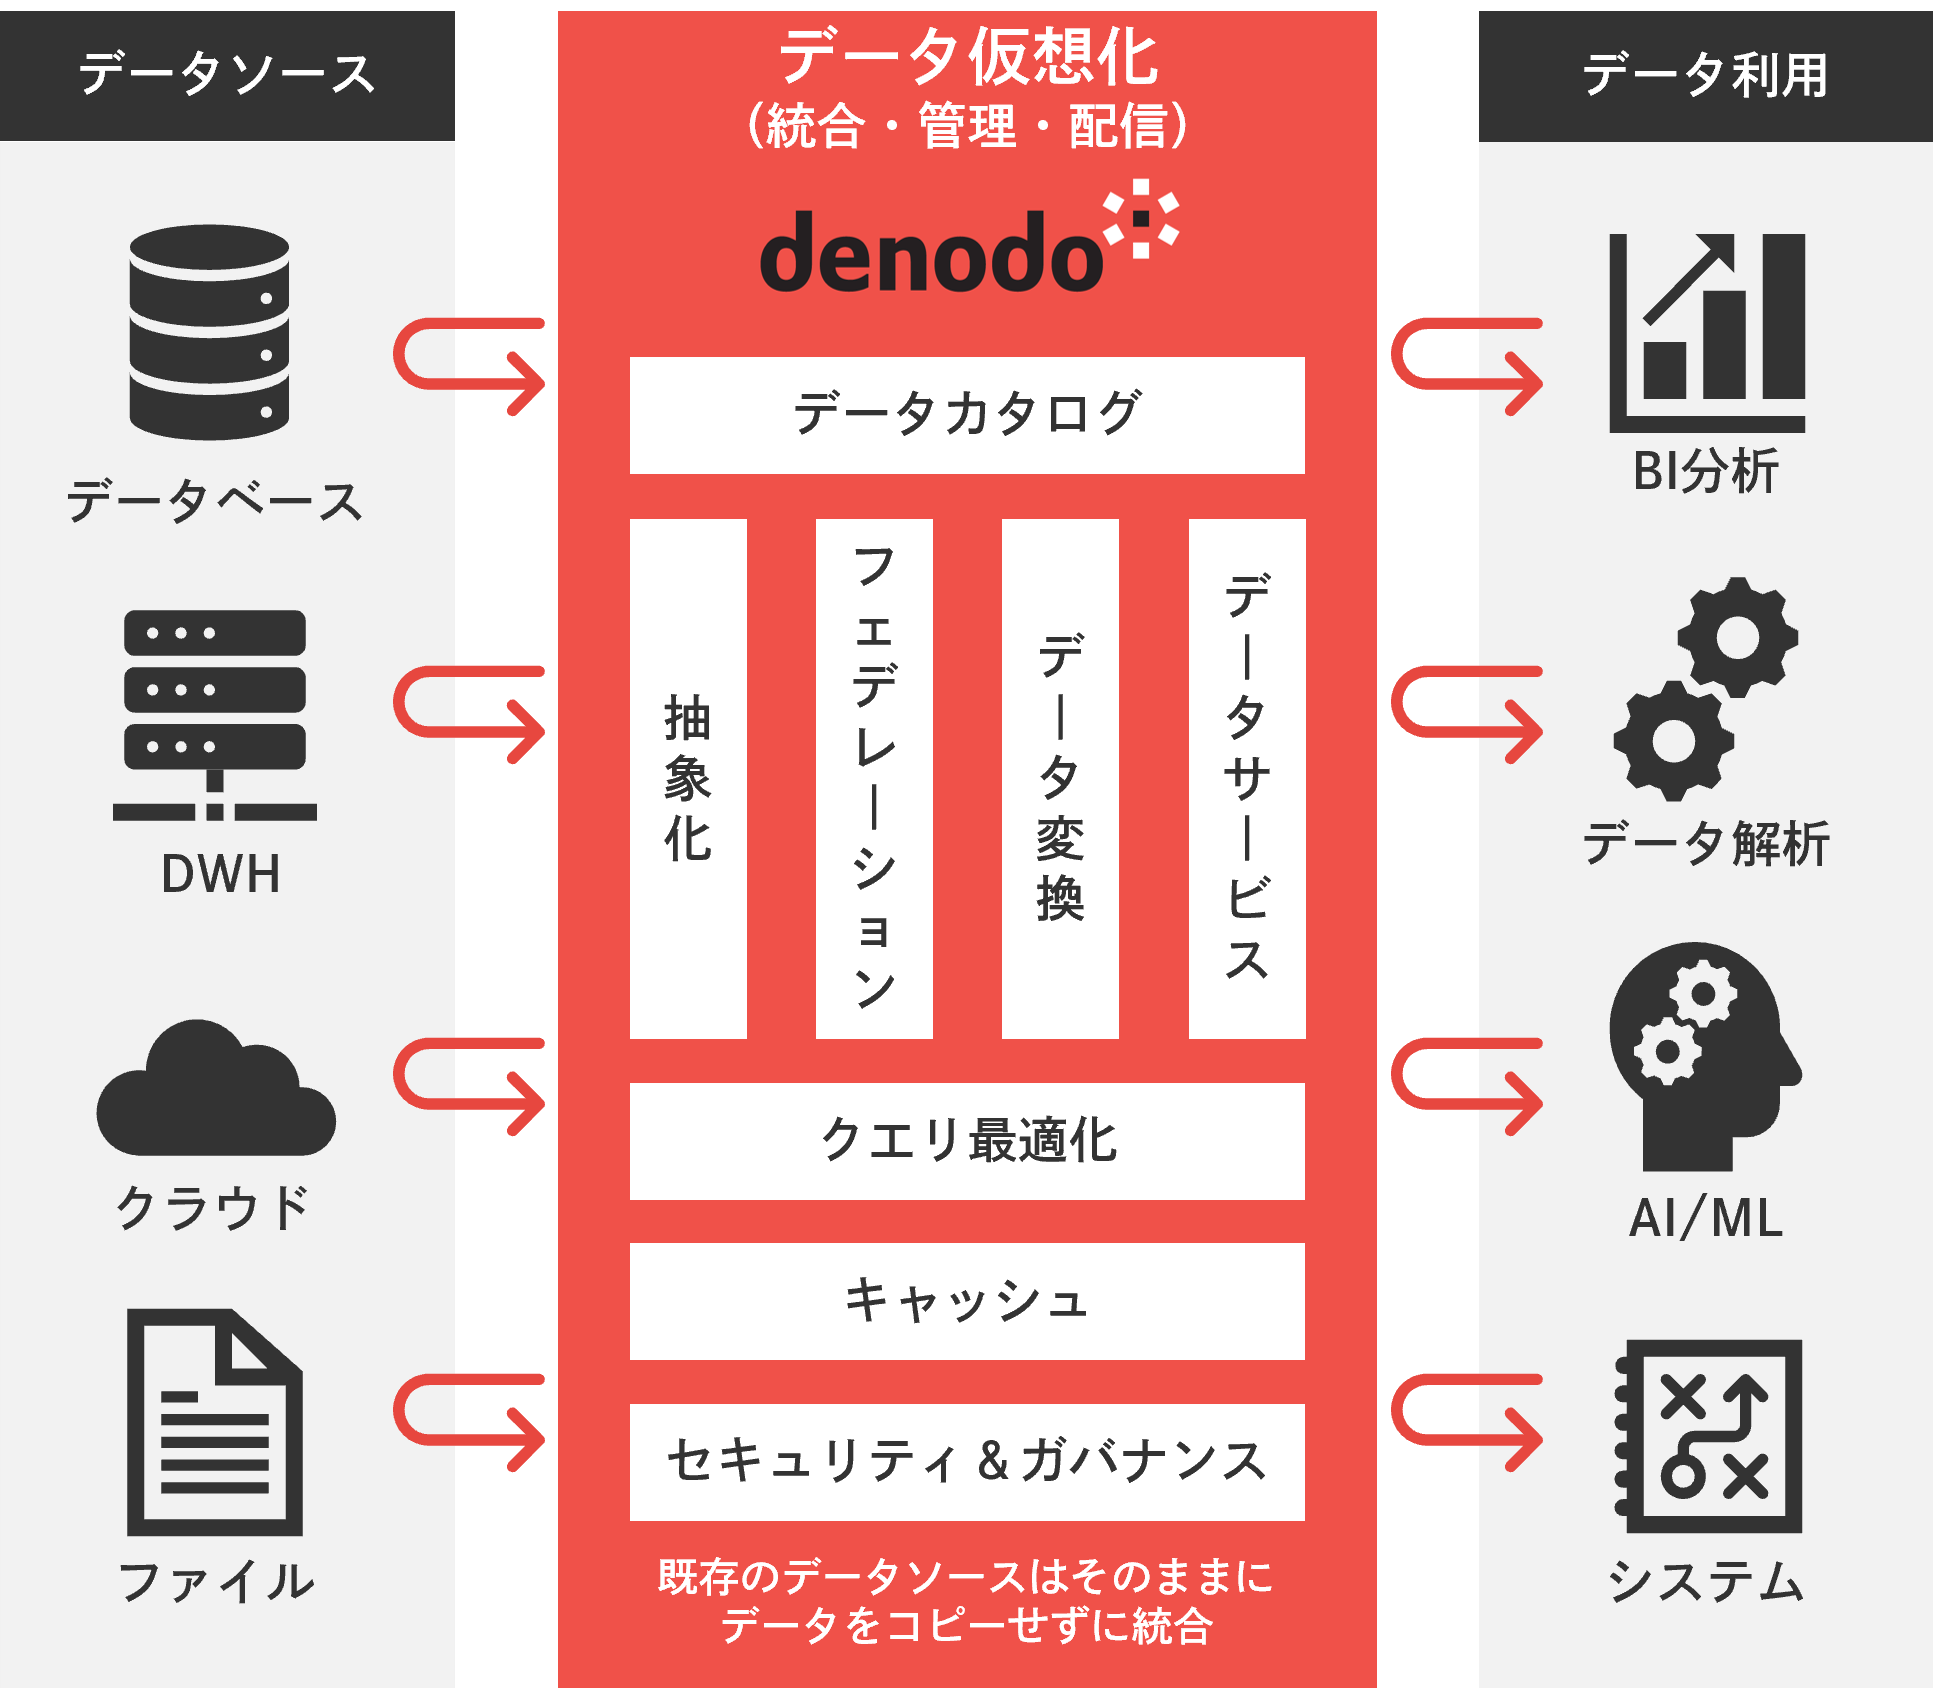 Denodoはデータ仮想化の技術をもちいて、論理的なデータウェアハウスを構築します。